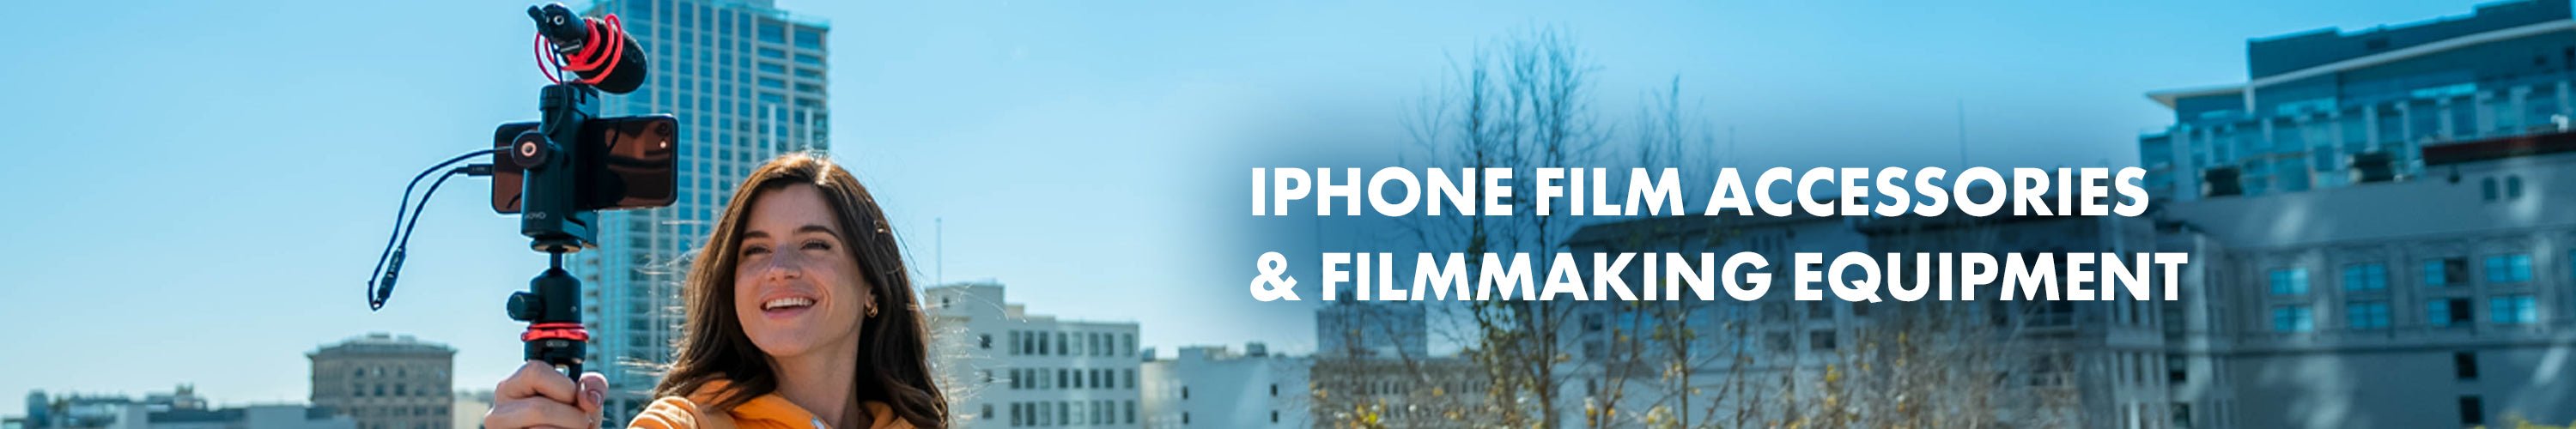 iPhone Film Accessories & Filmmaking Equipment - Movo